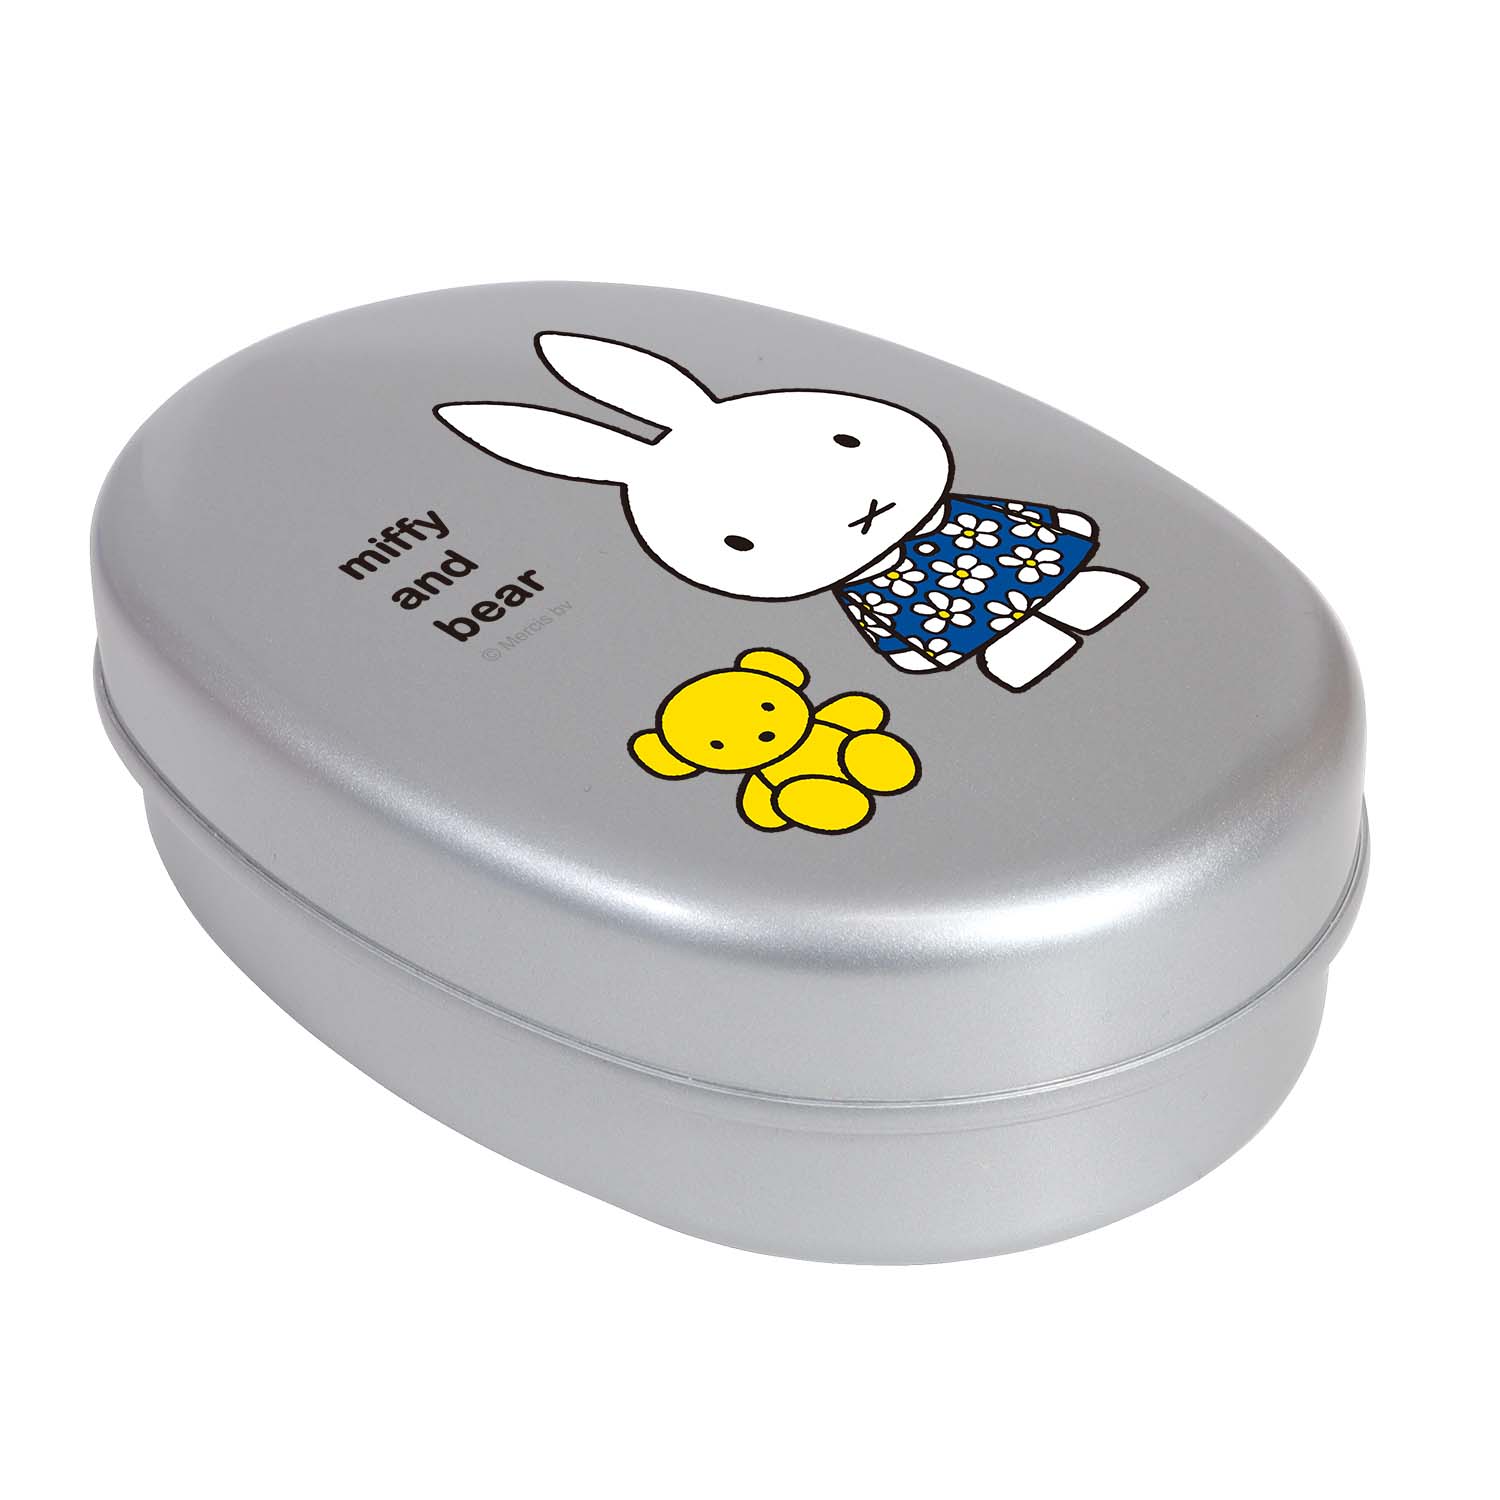 Kutsuwa Miffy & Teddy Bear Lunch Box Aluminum Bento Box